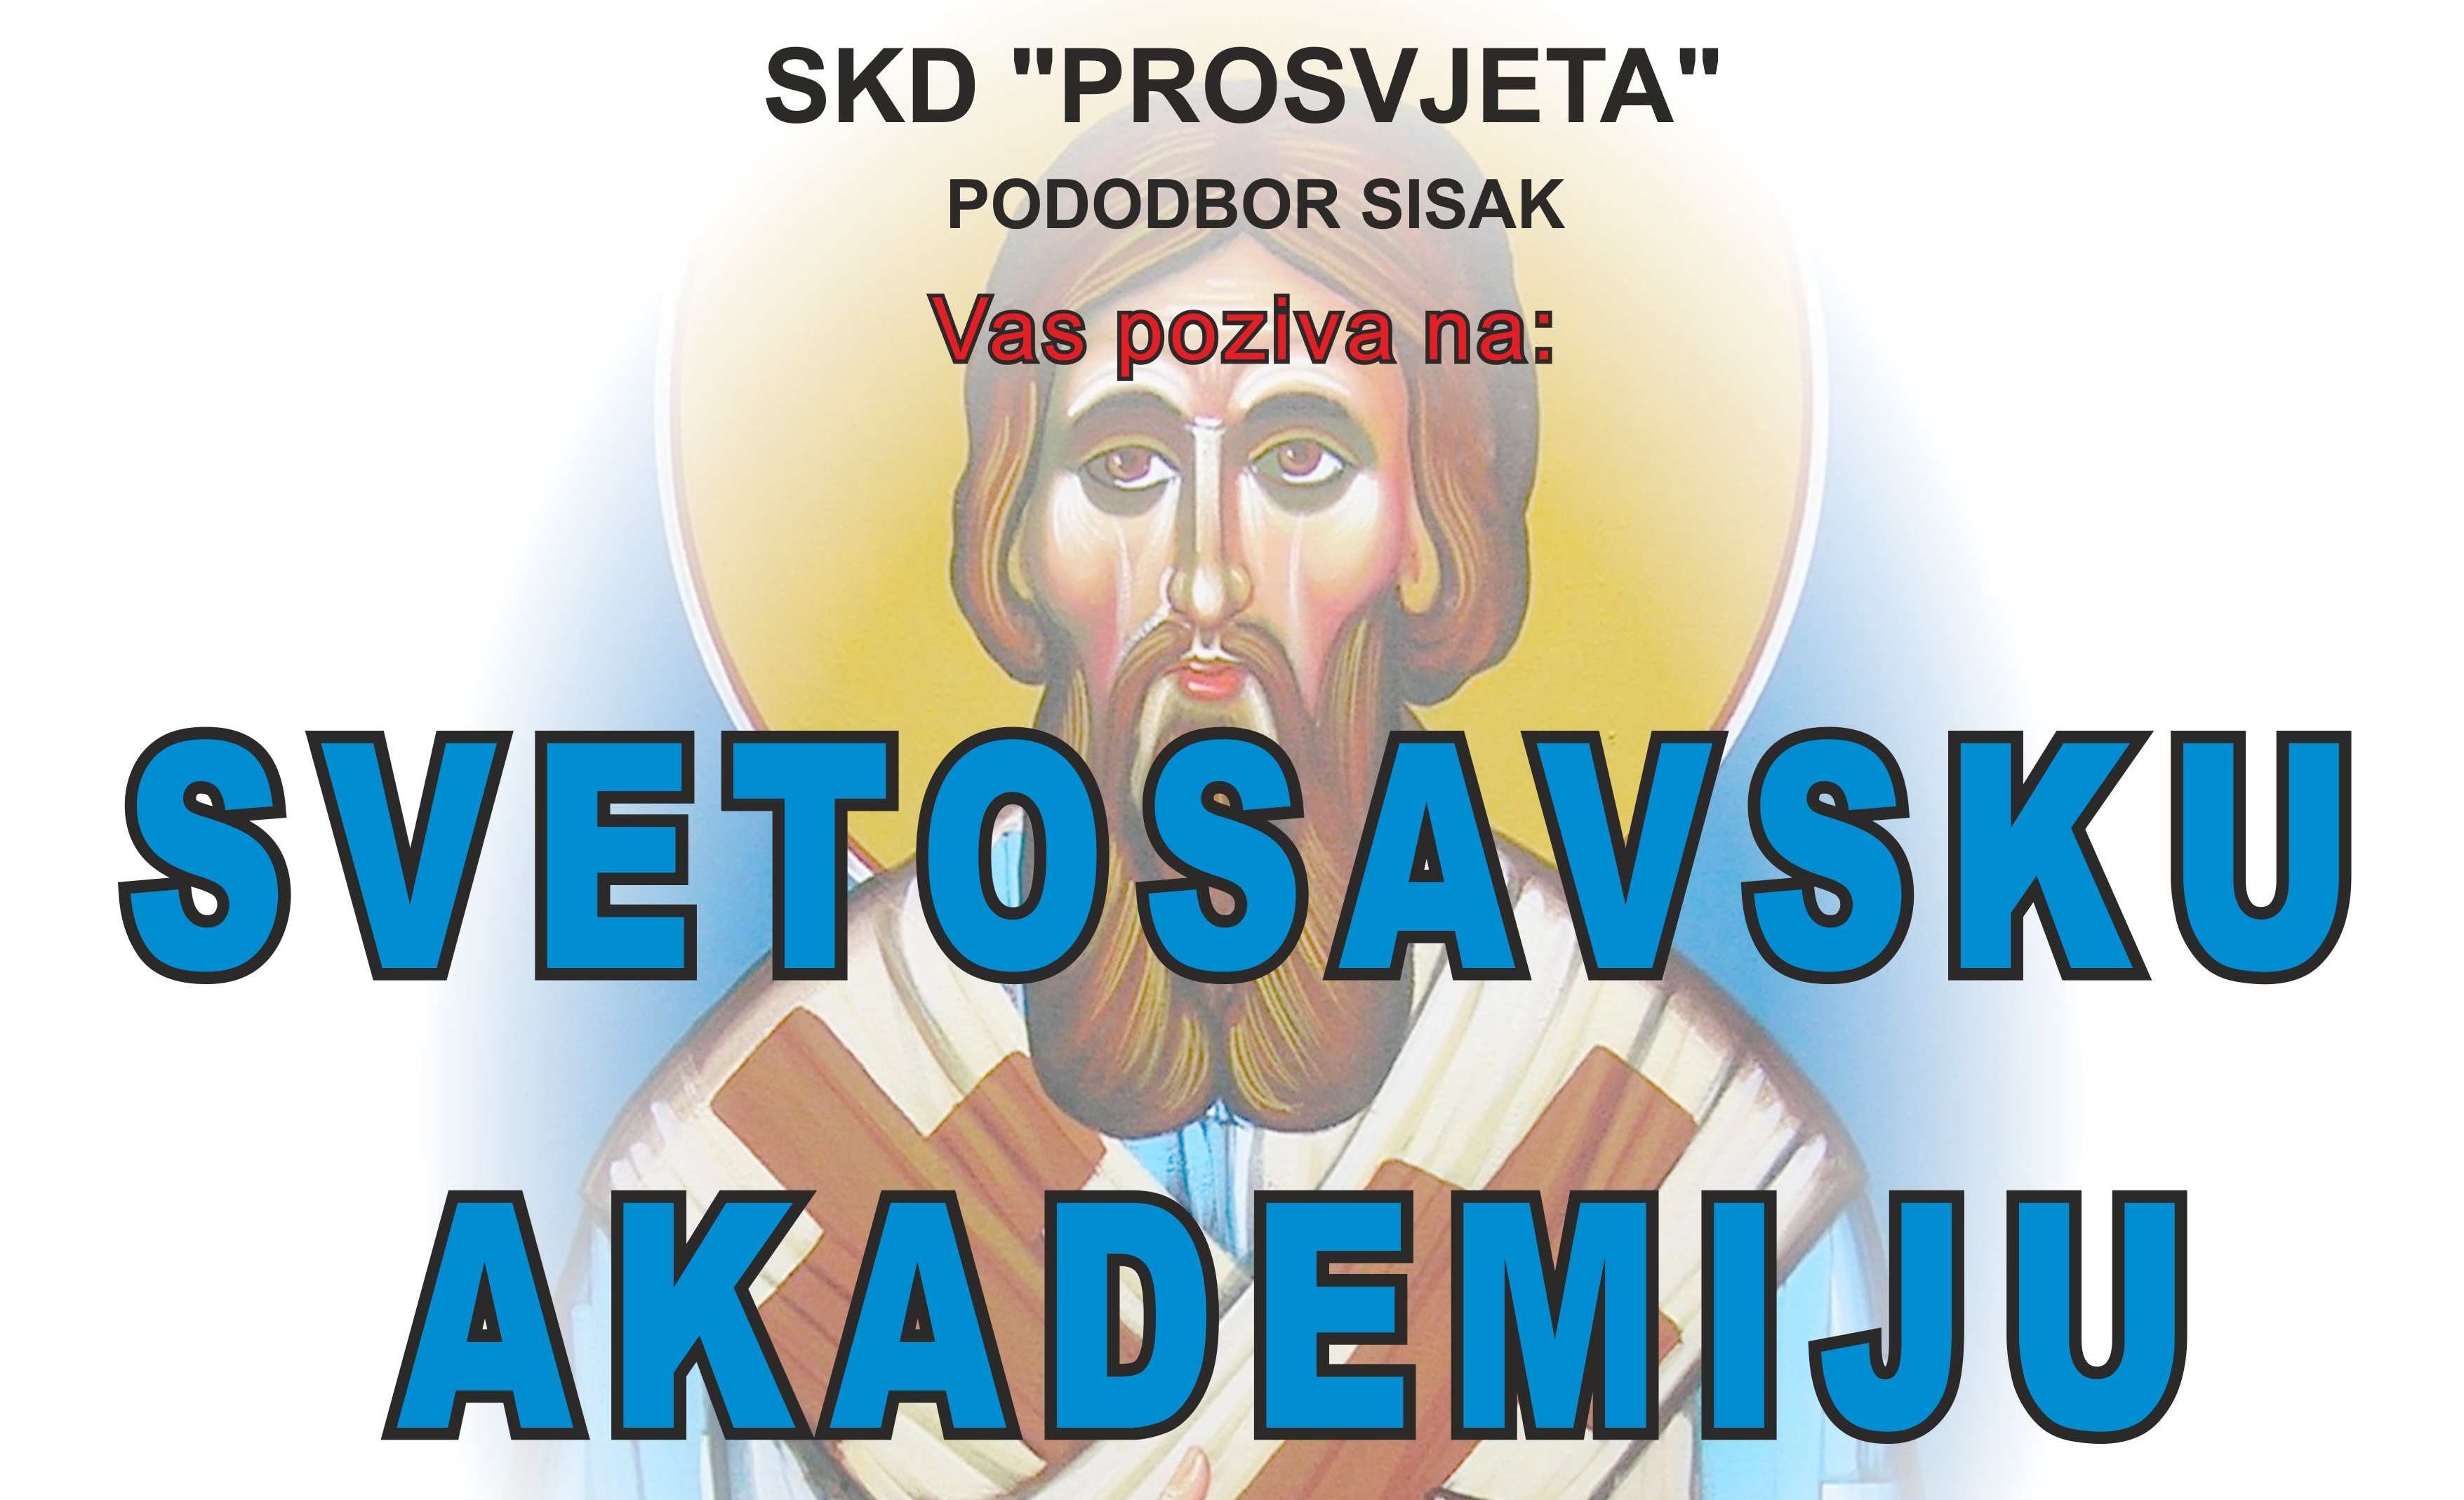 You are currently viewing Svetosavska akademija u Kazalištu 21